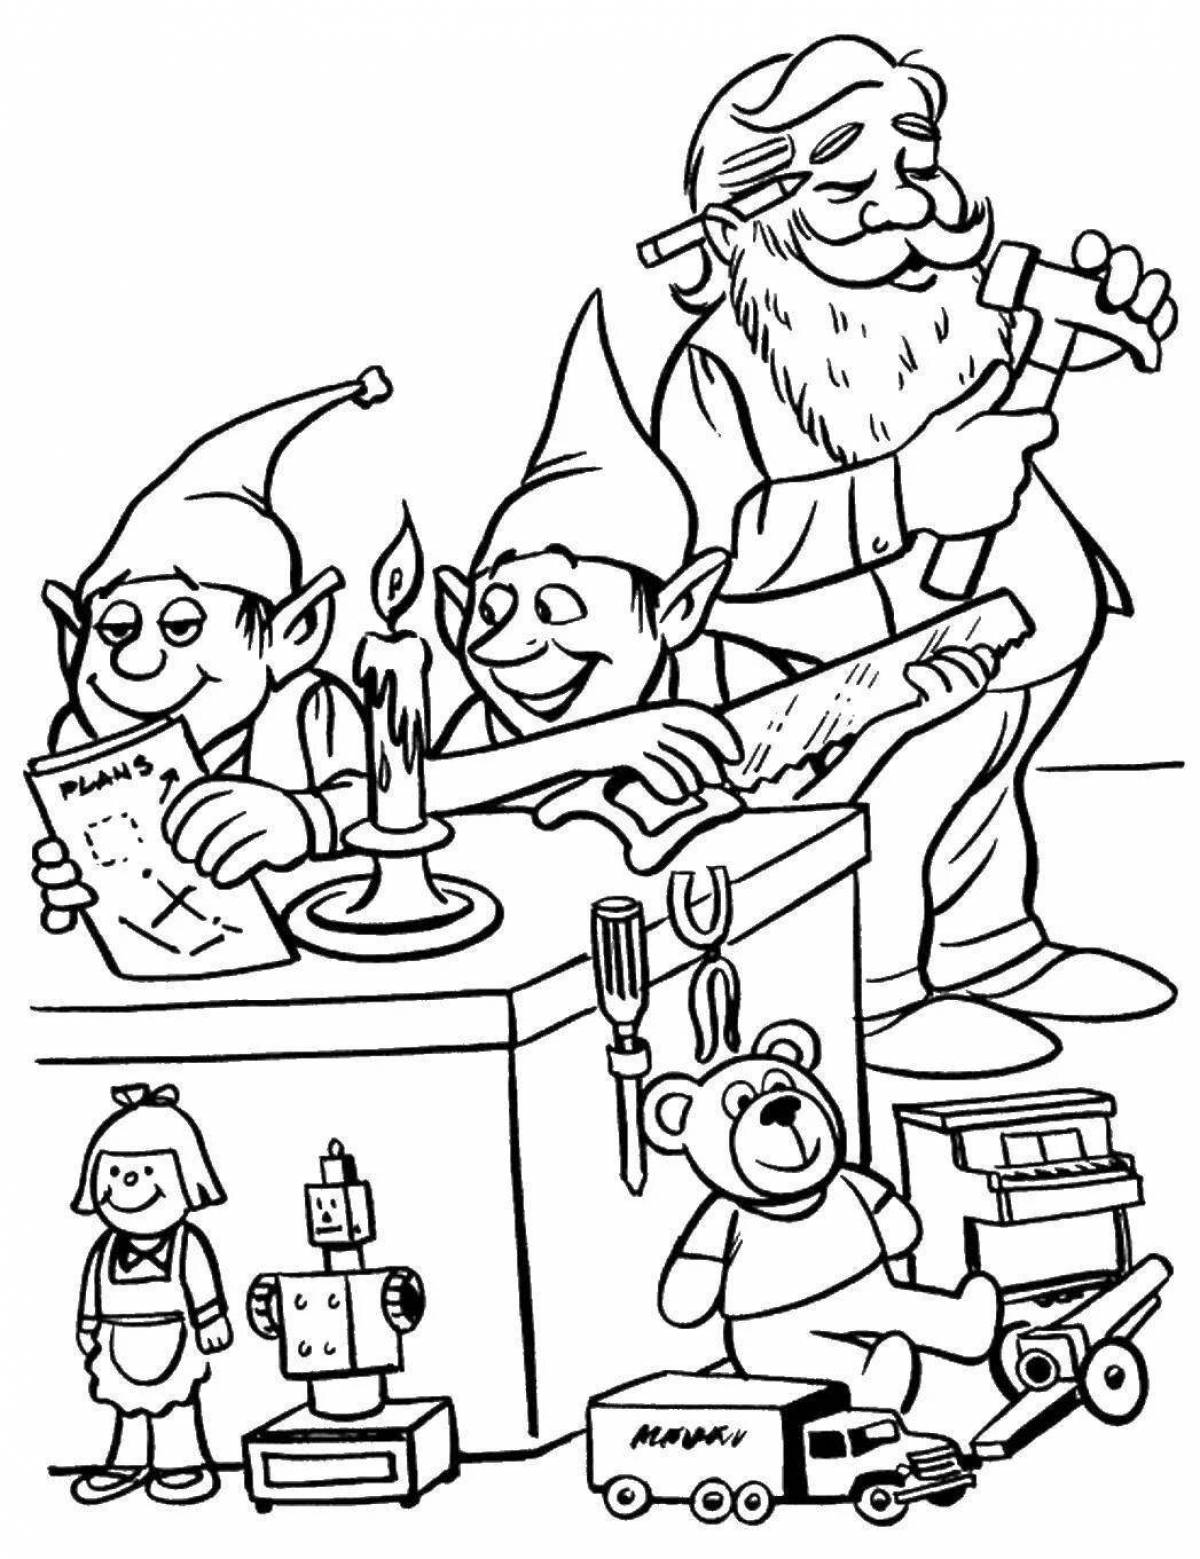 Christmas elf coloring book full of hope